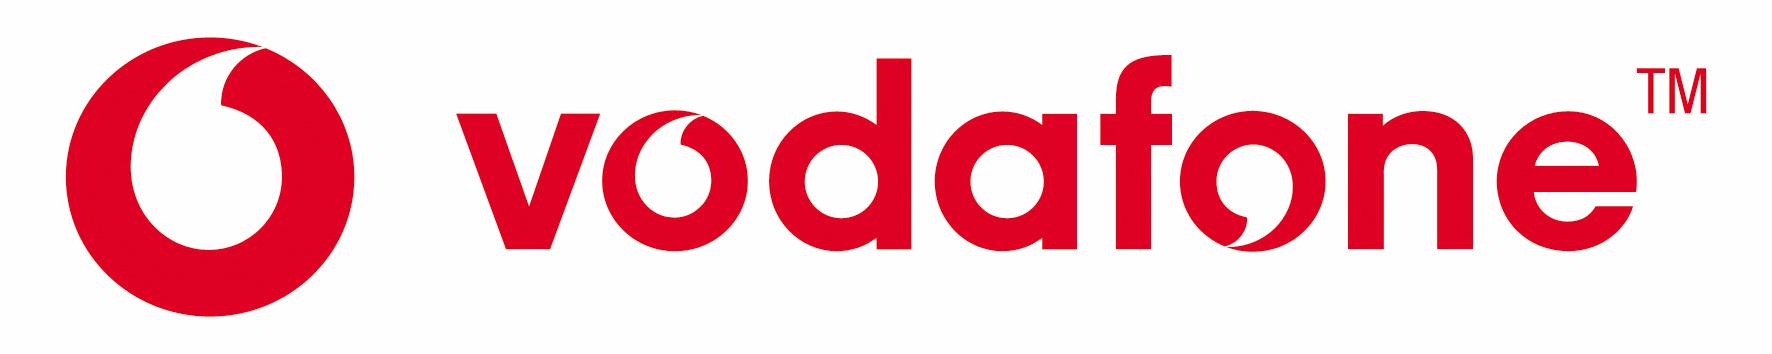 Vodafone-Logo.jpg